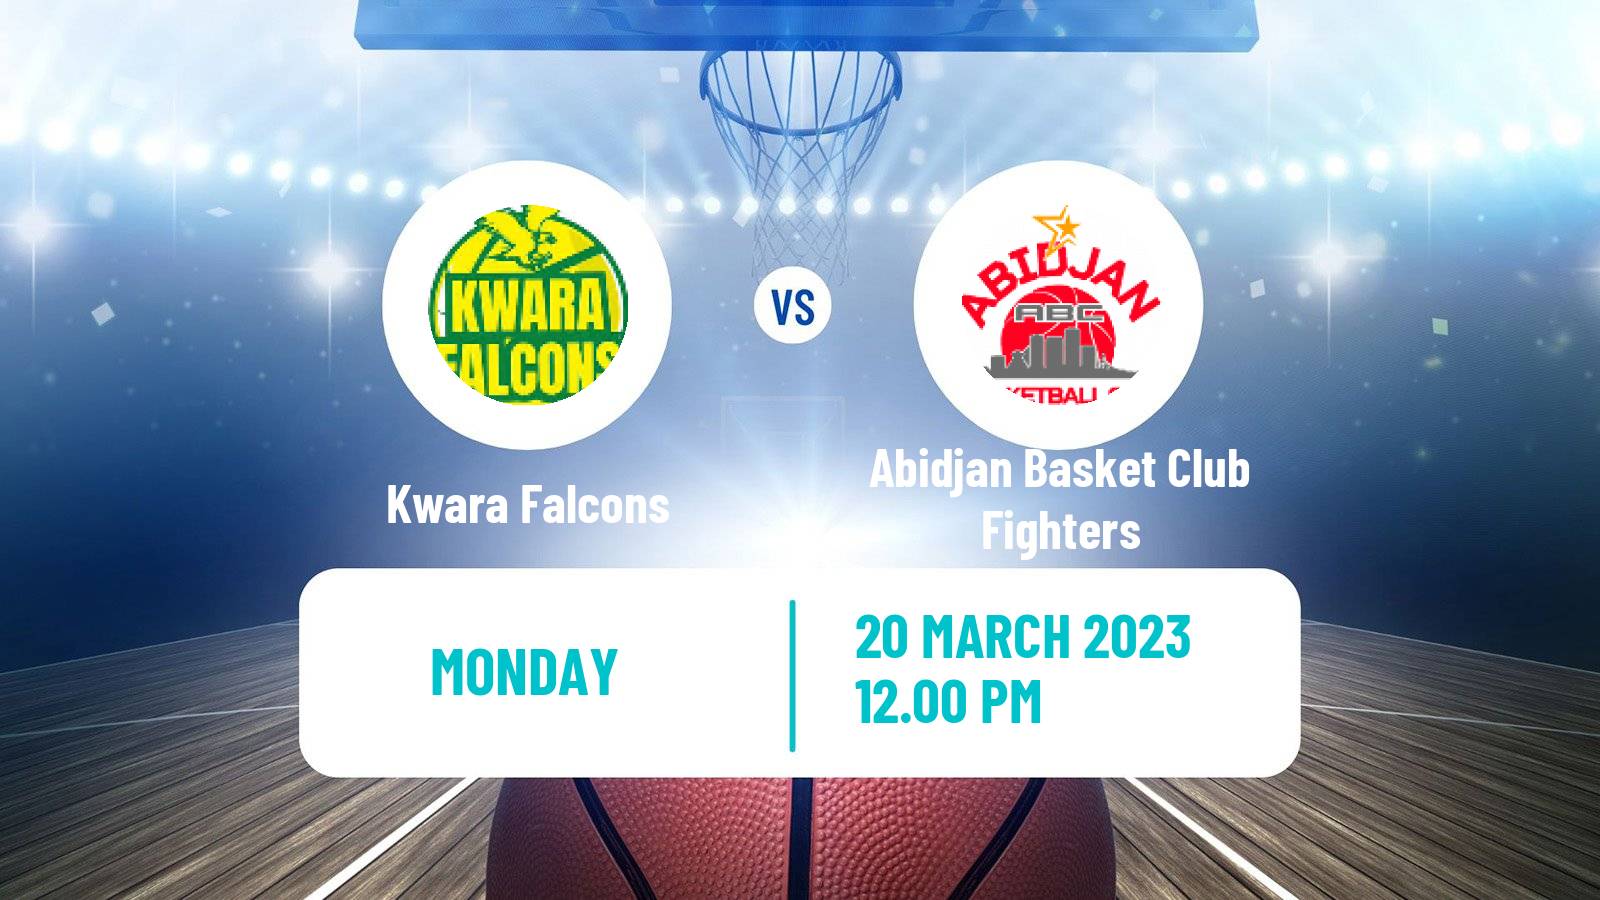 Basketball Basketball Africa League Kwara Falcons - Abidjan Basket Club Fighters